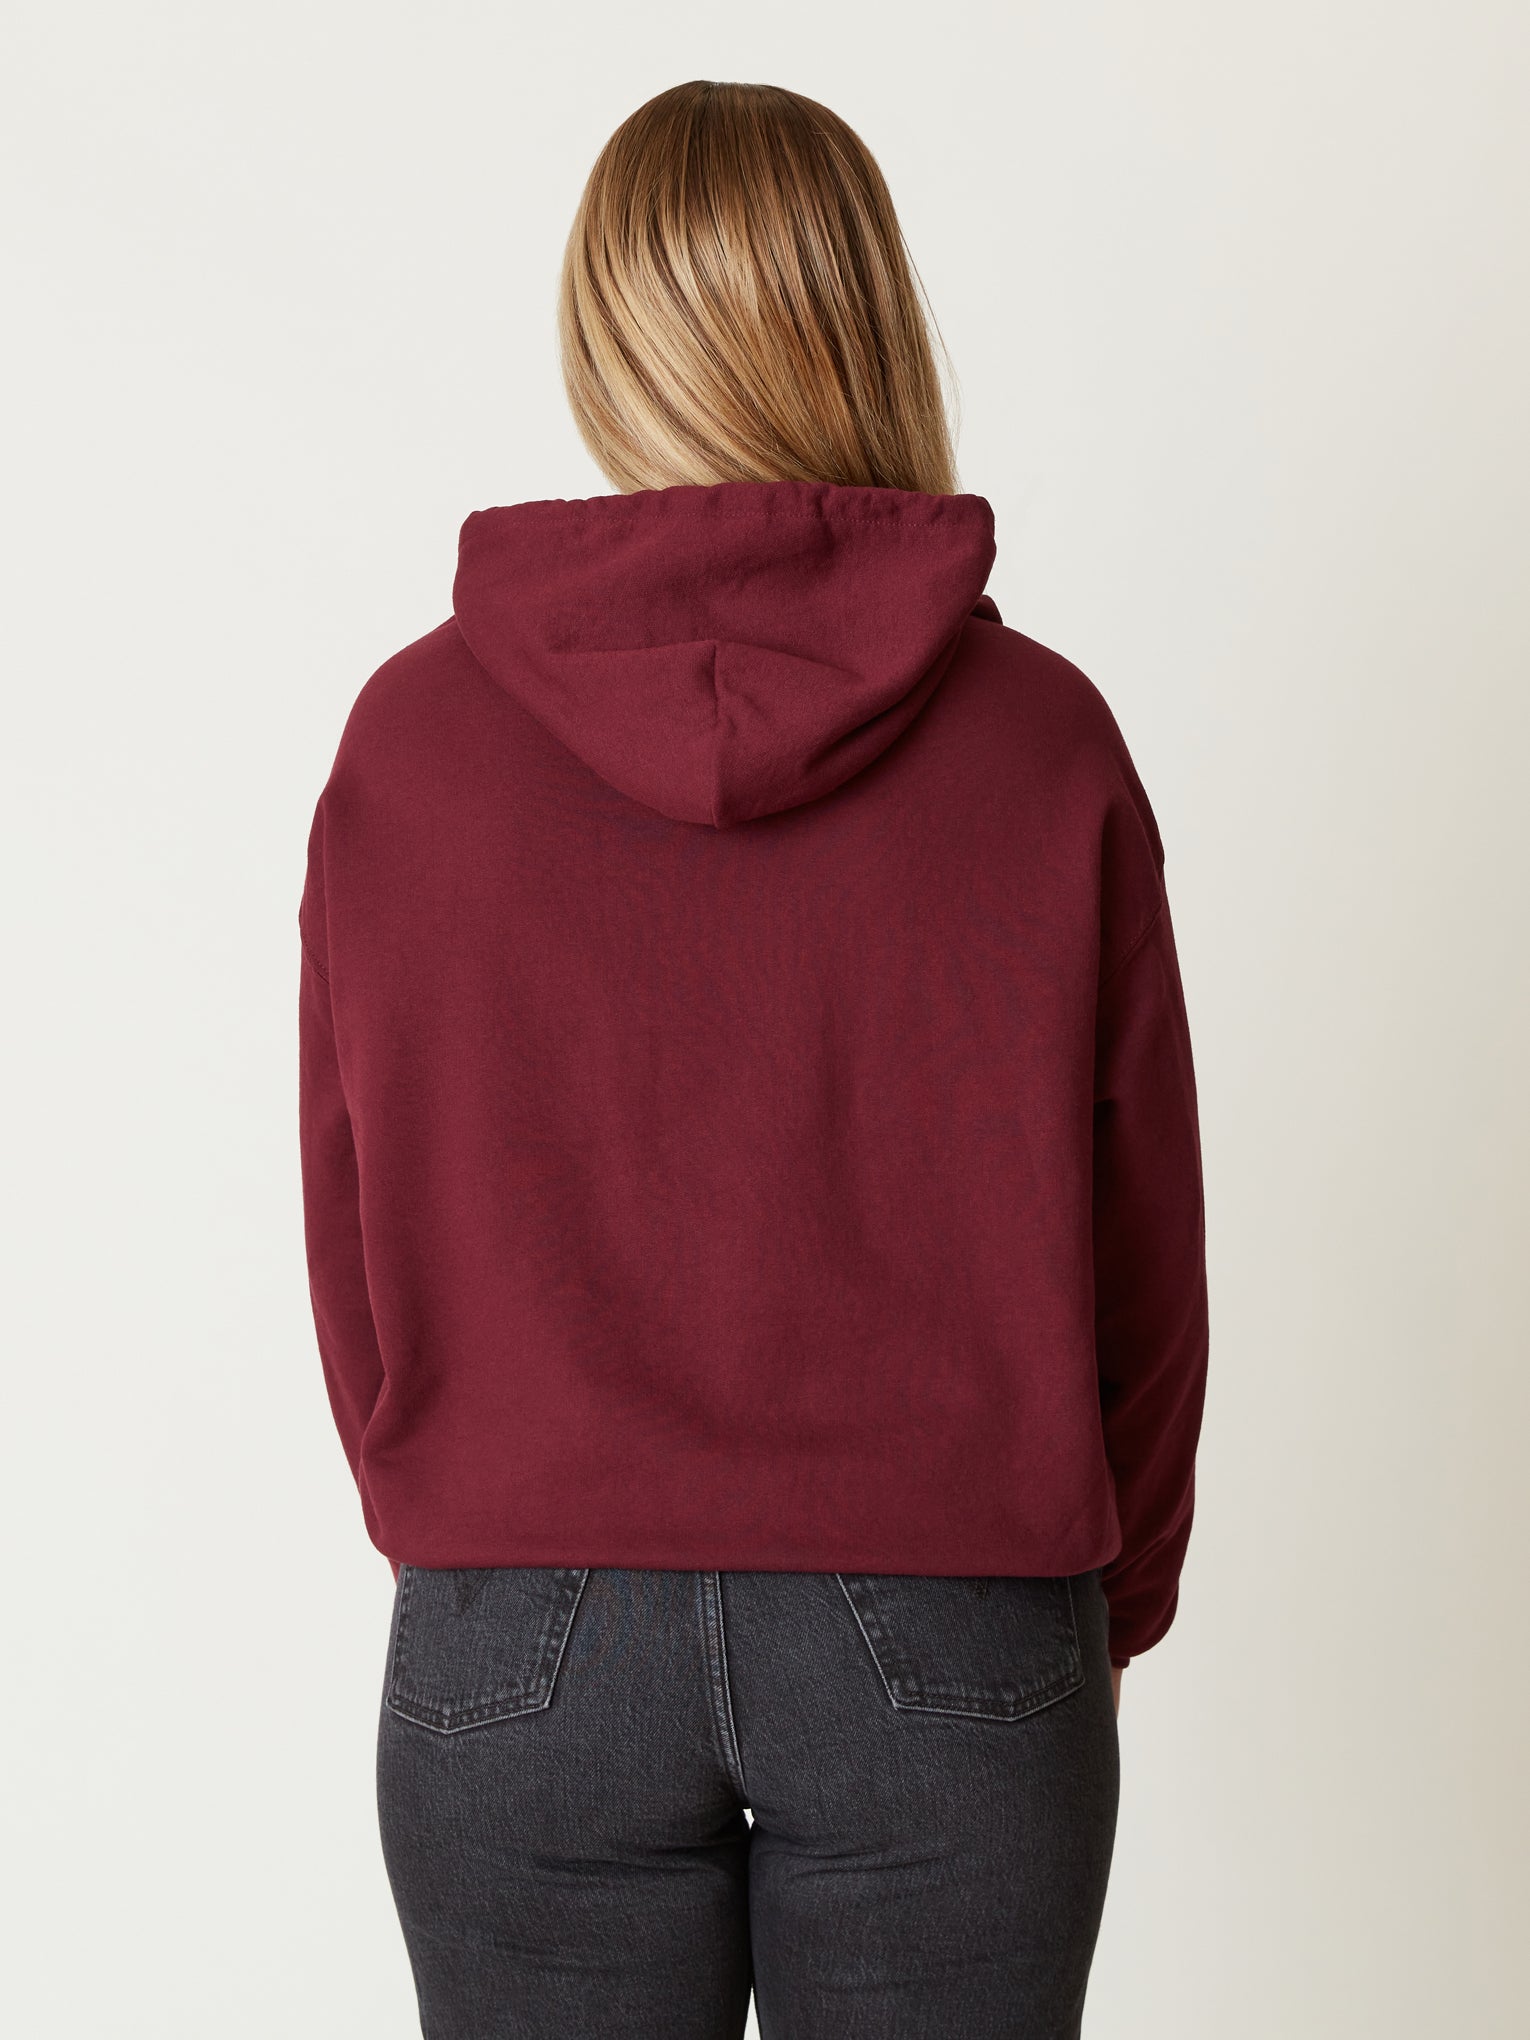 Hooded Sweatshirt MIT Shop Harvard – The